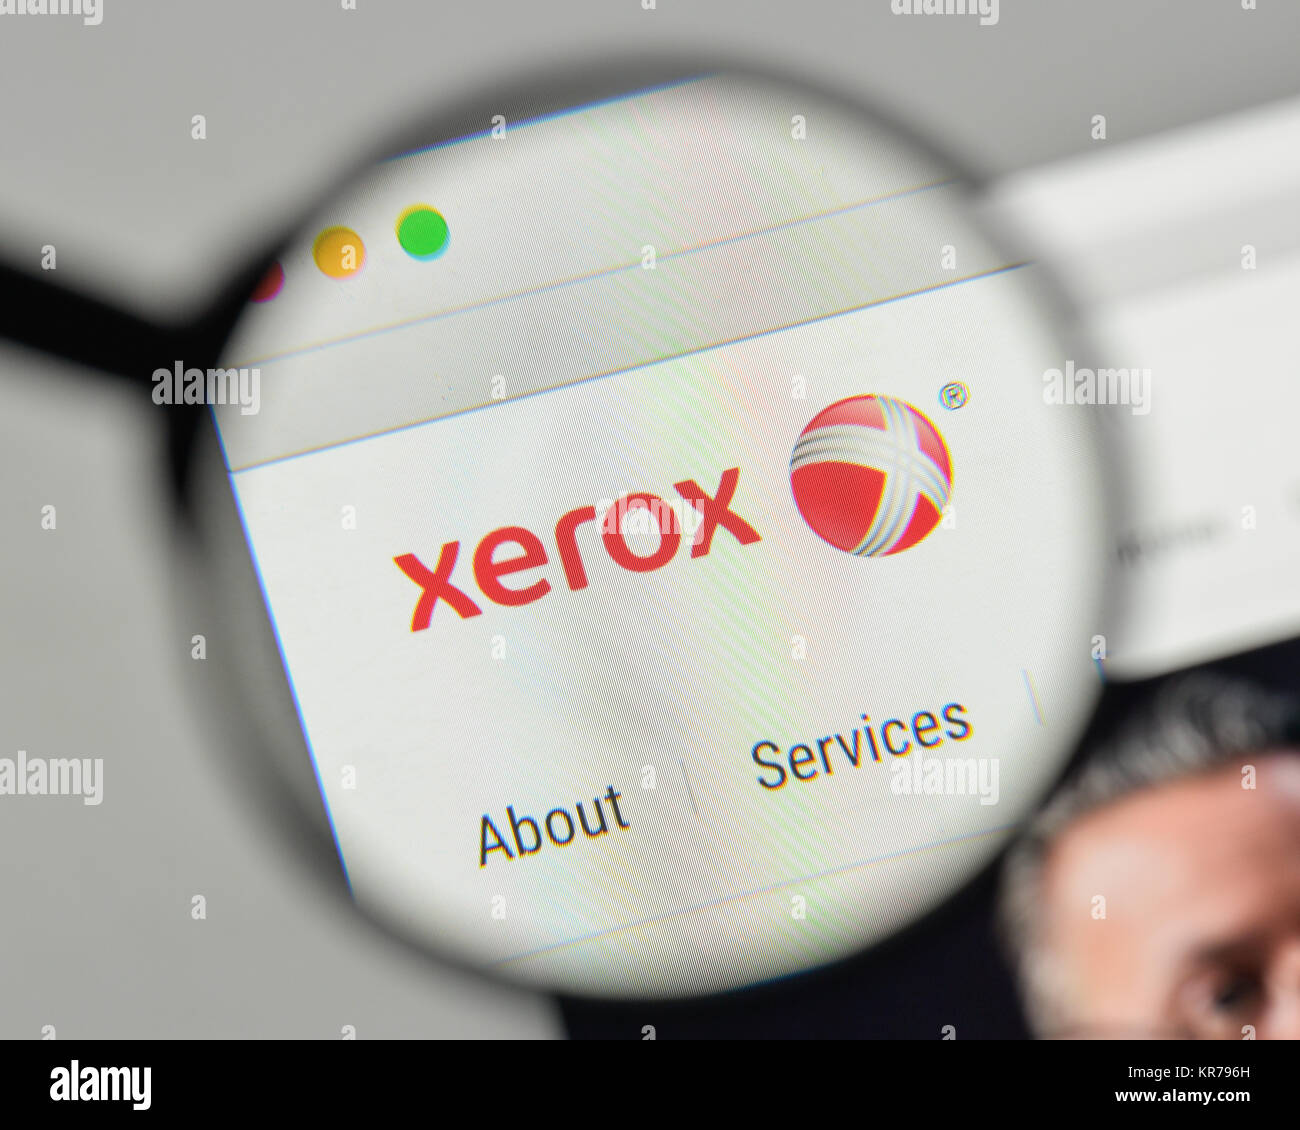 Milan, Italy - November 1, 2017: Xerox logo on the website homepage. Stock Photo